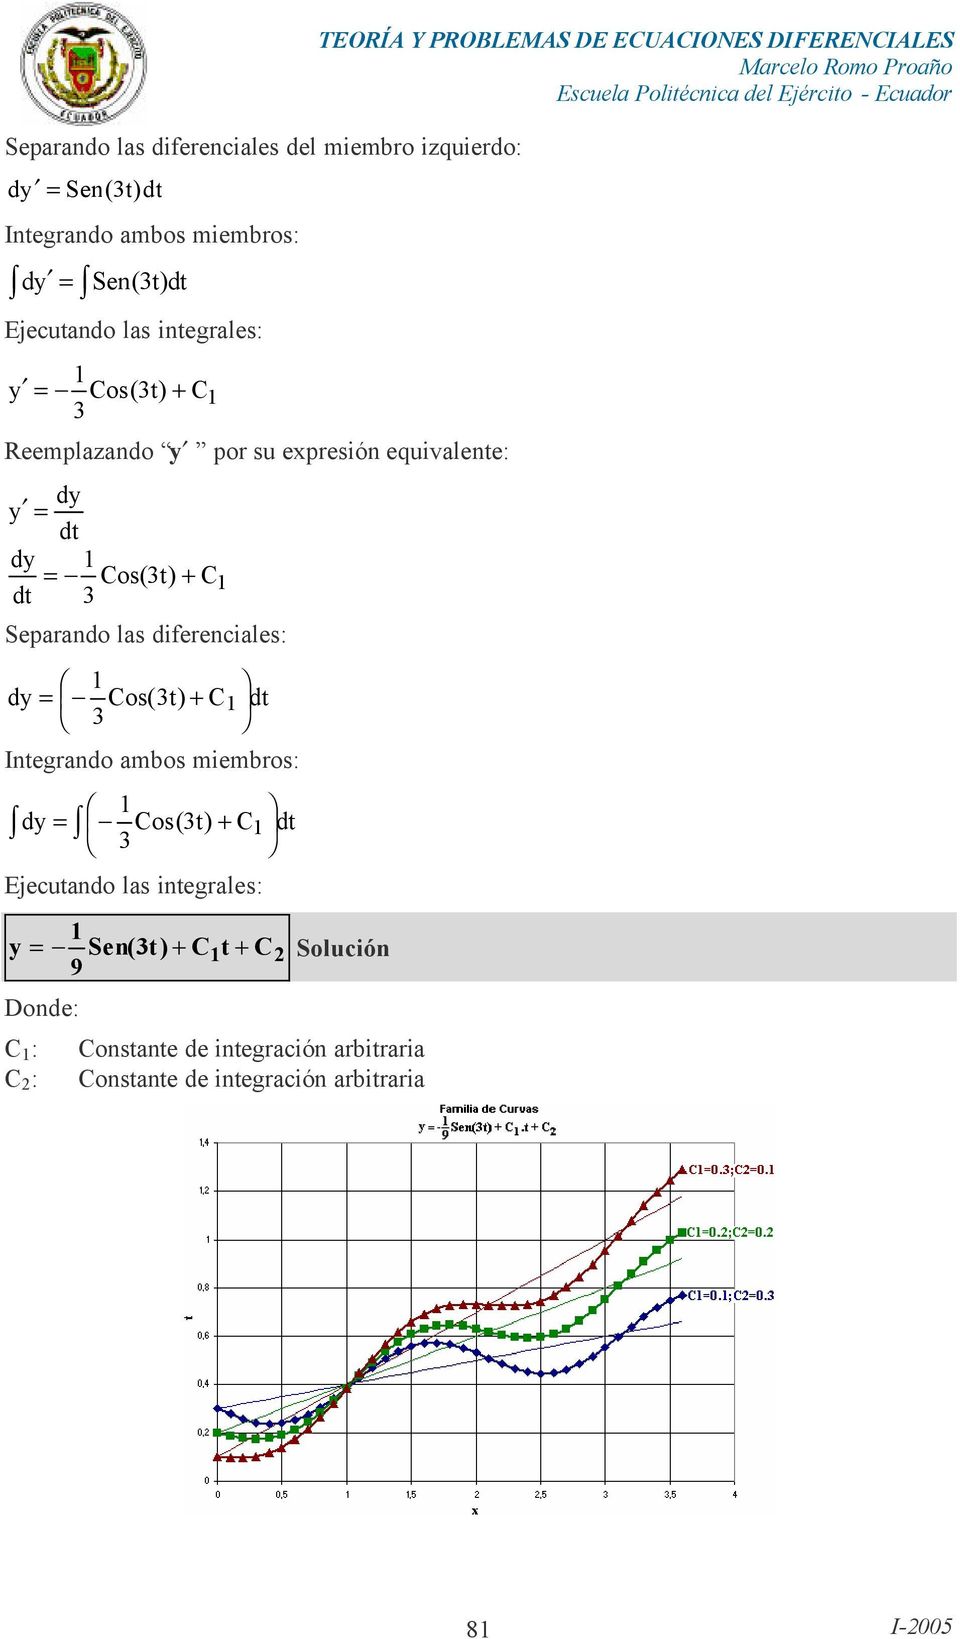 diferenciales: d 1 Cos(t) + C1 dt Integrando ambos miembros: 1 d Cos(t) + C1 dt Ejecutando las integrales: 1 -